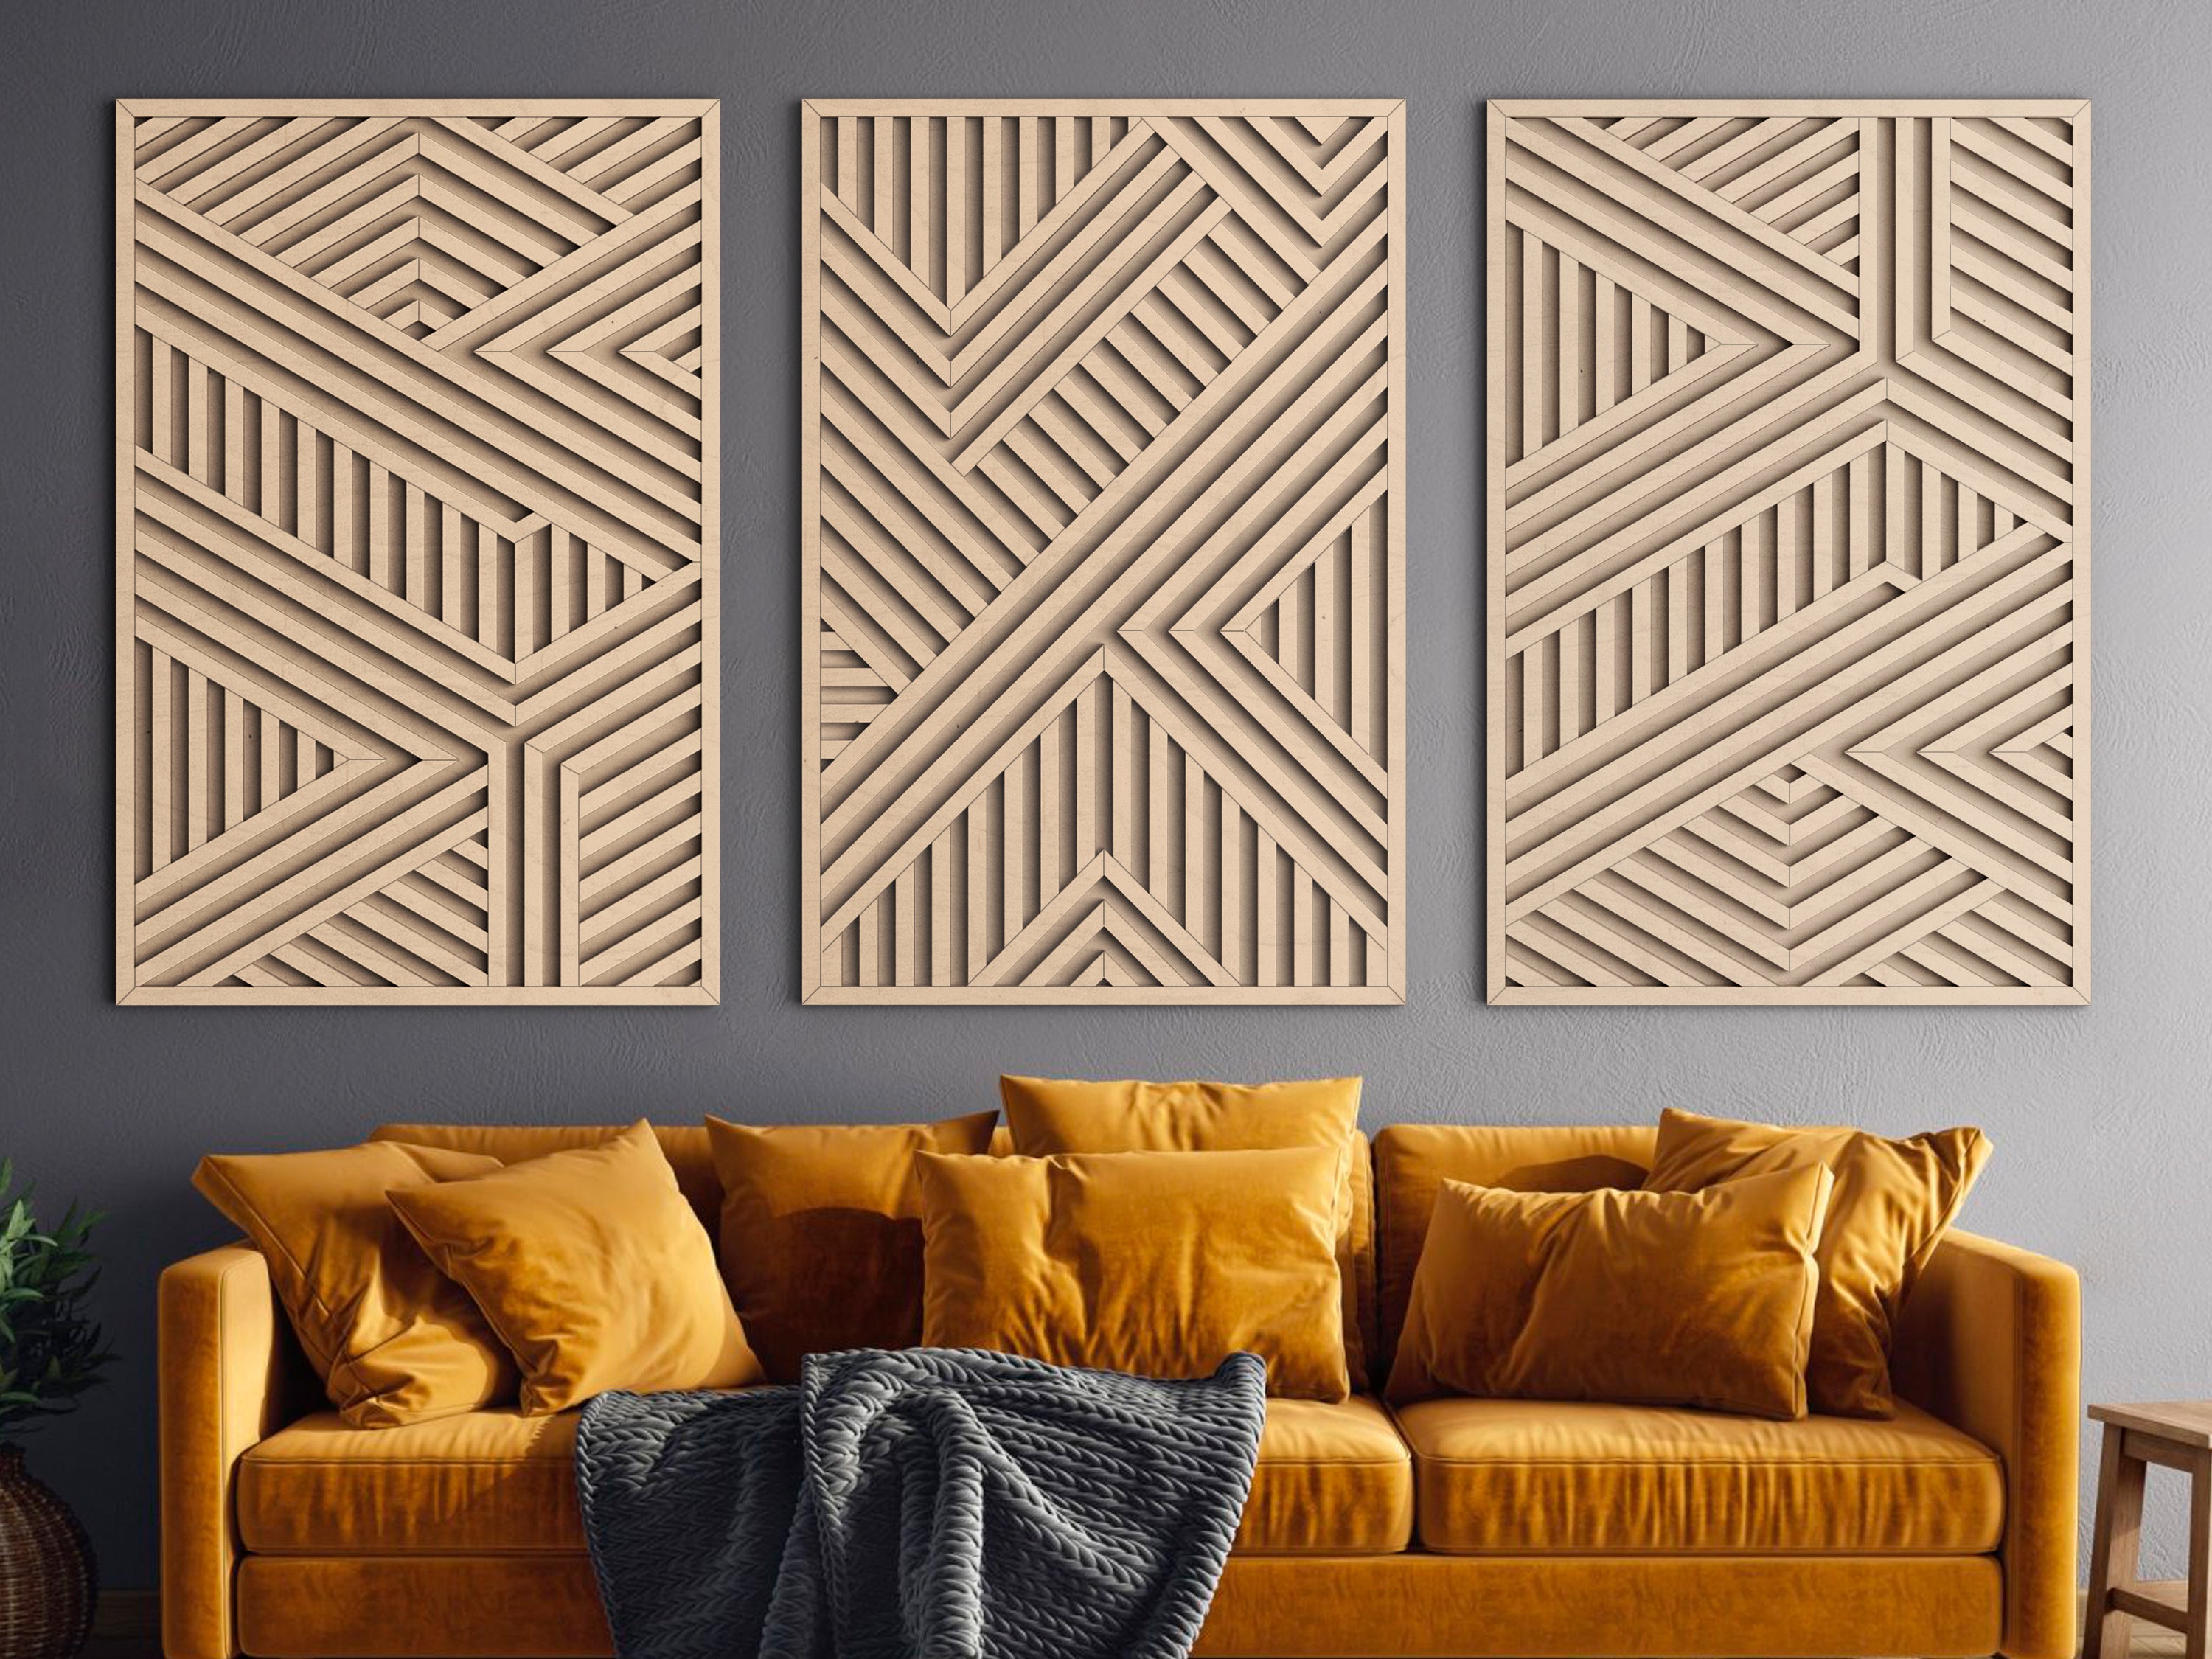 Wood wall art - Geometric wood wall decor - Abstract wall art